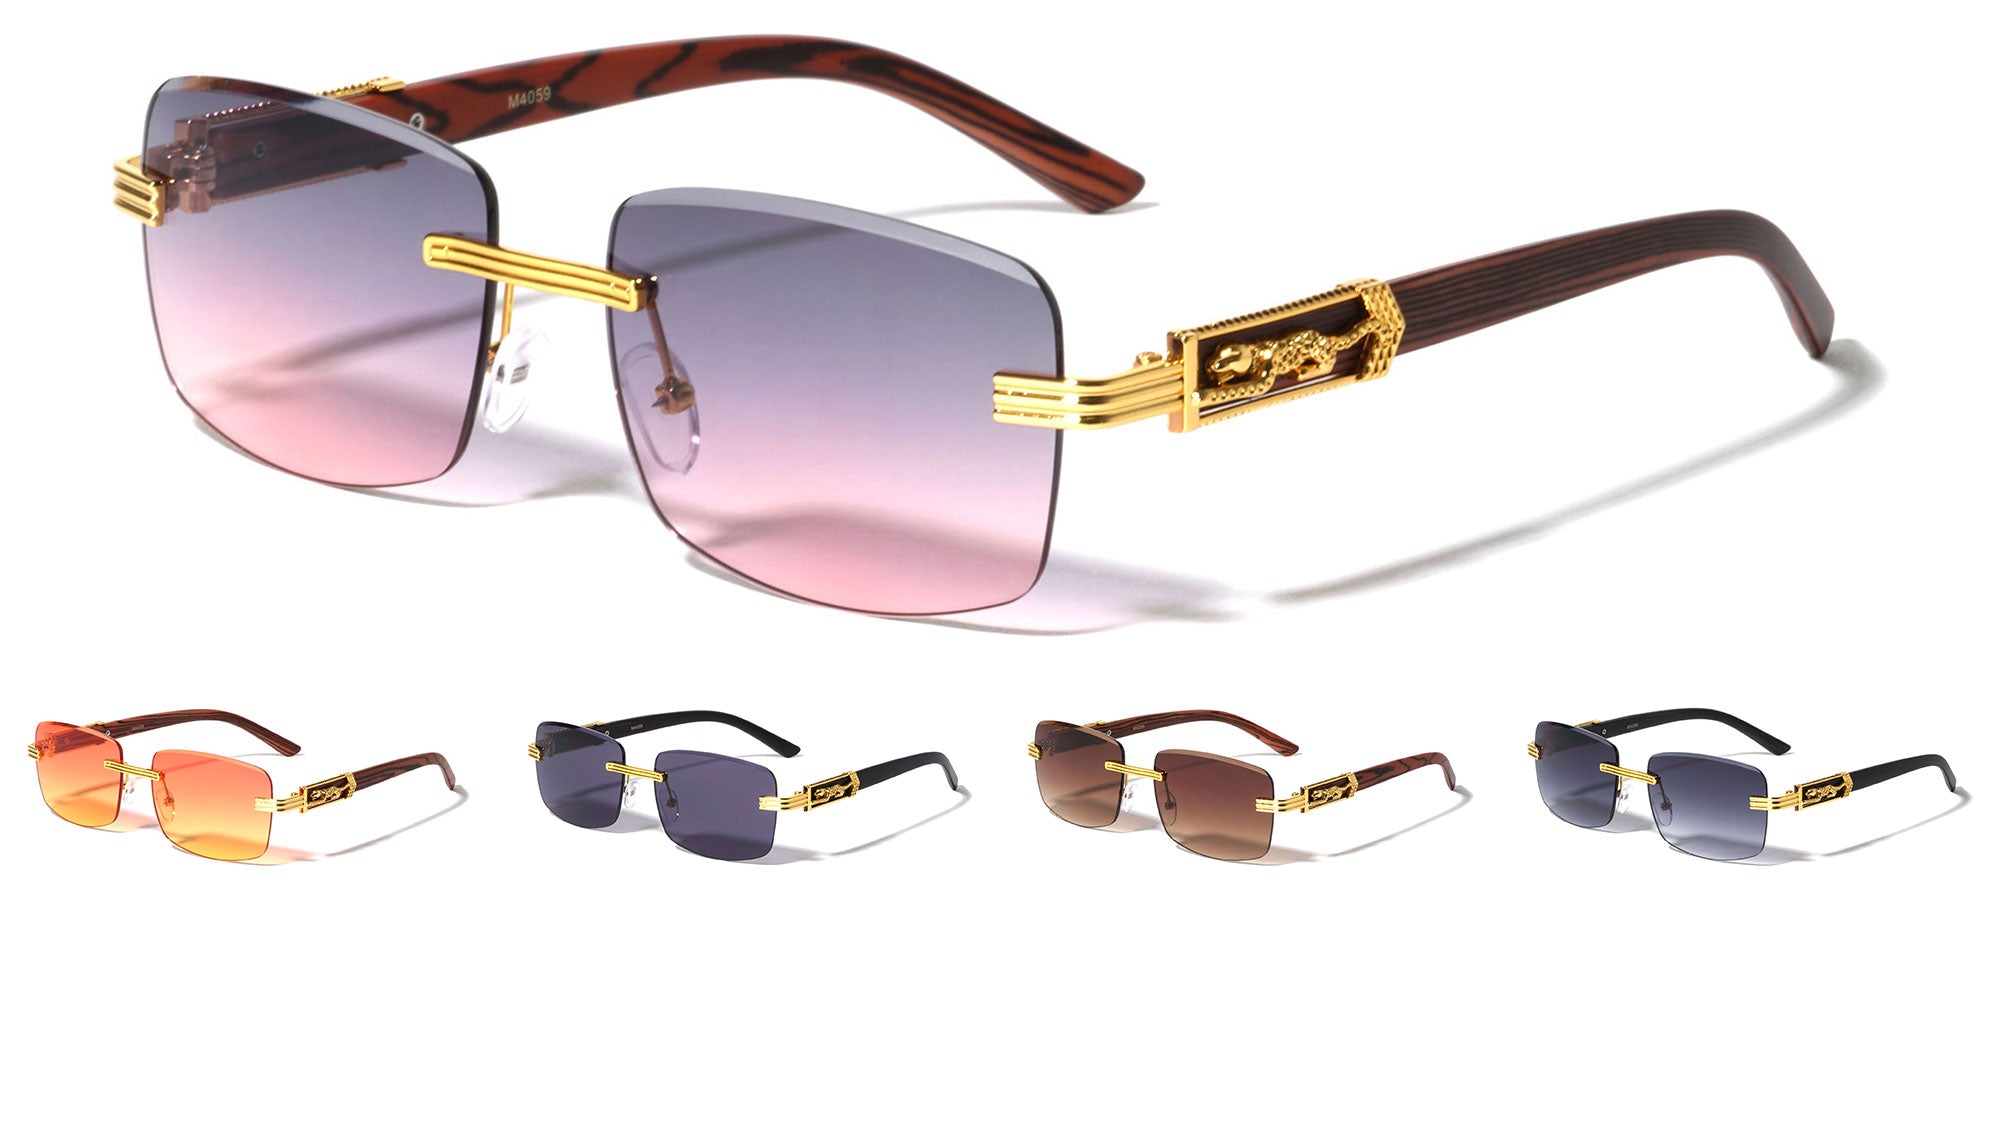 Sunglasses Fashion Folding Sun Glasses Women Men Wholesale